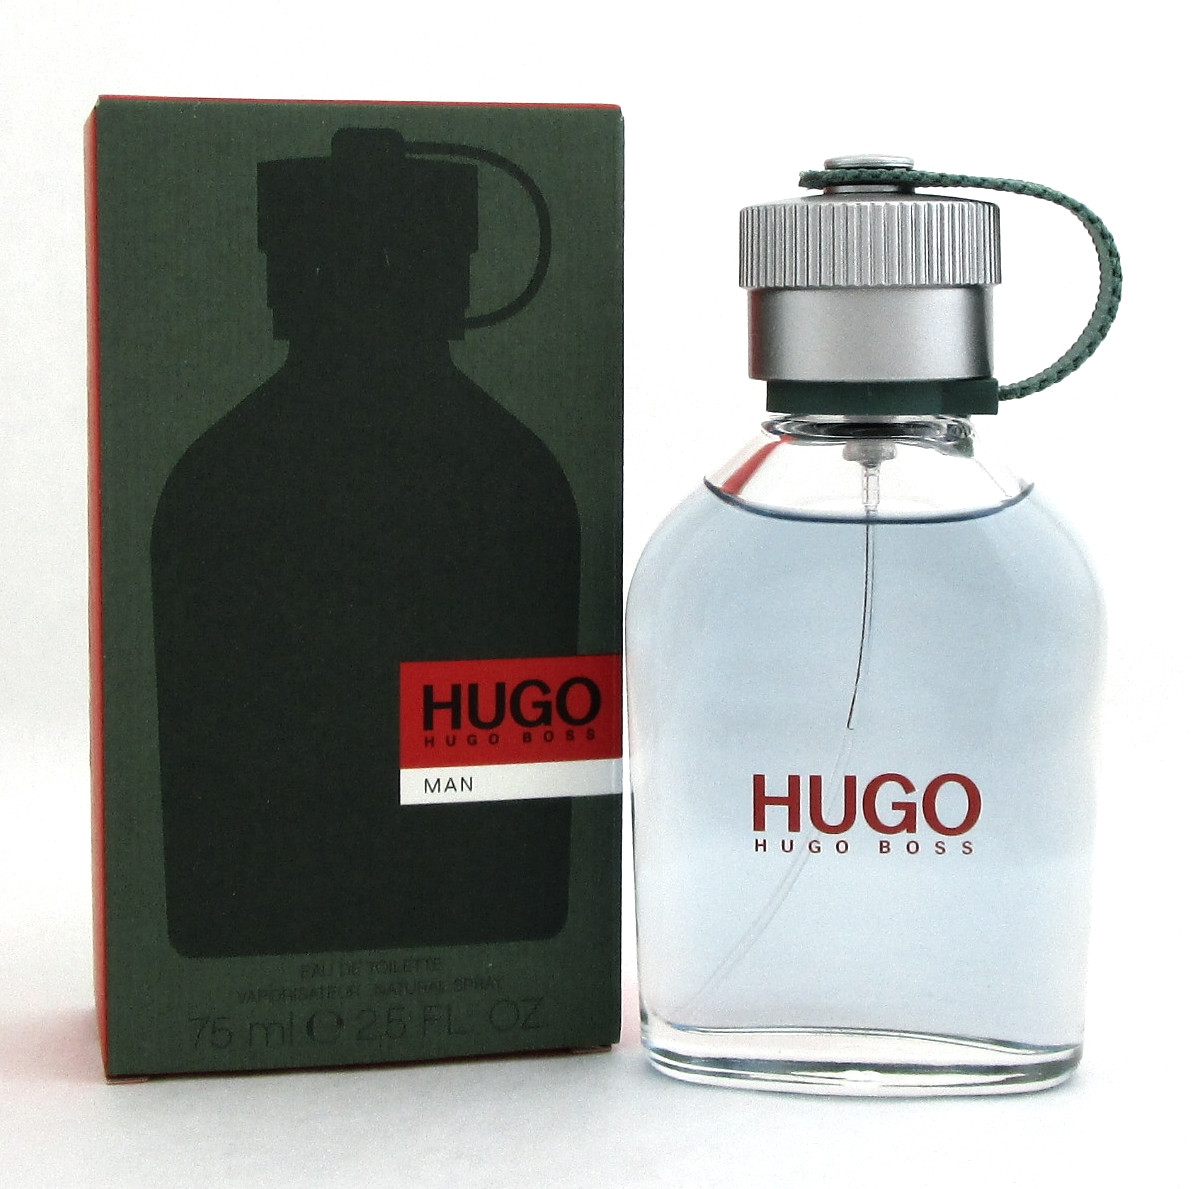 Hugo Man by Hugo Boss (Green Box) 2.5 oz/ 75 ml Eau de Toilette Spray ...